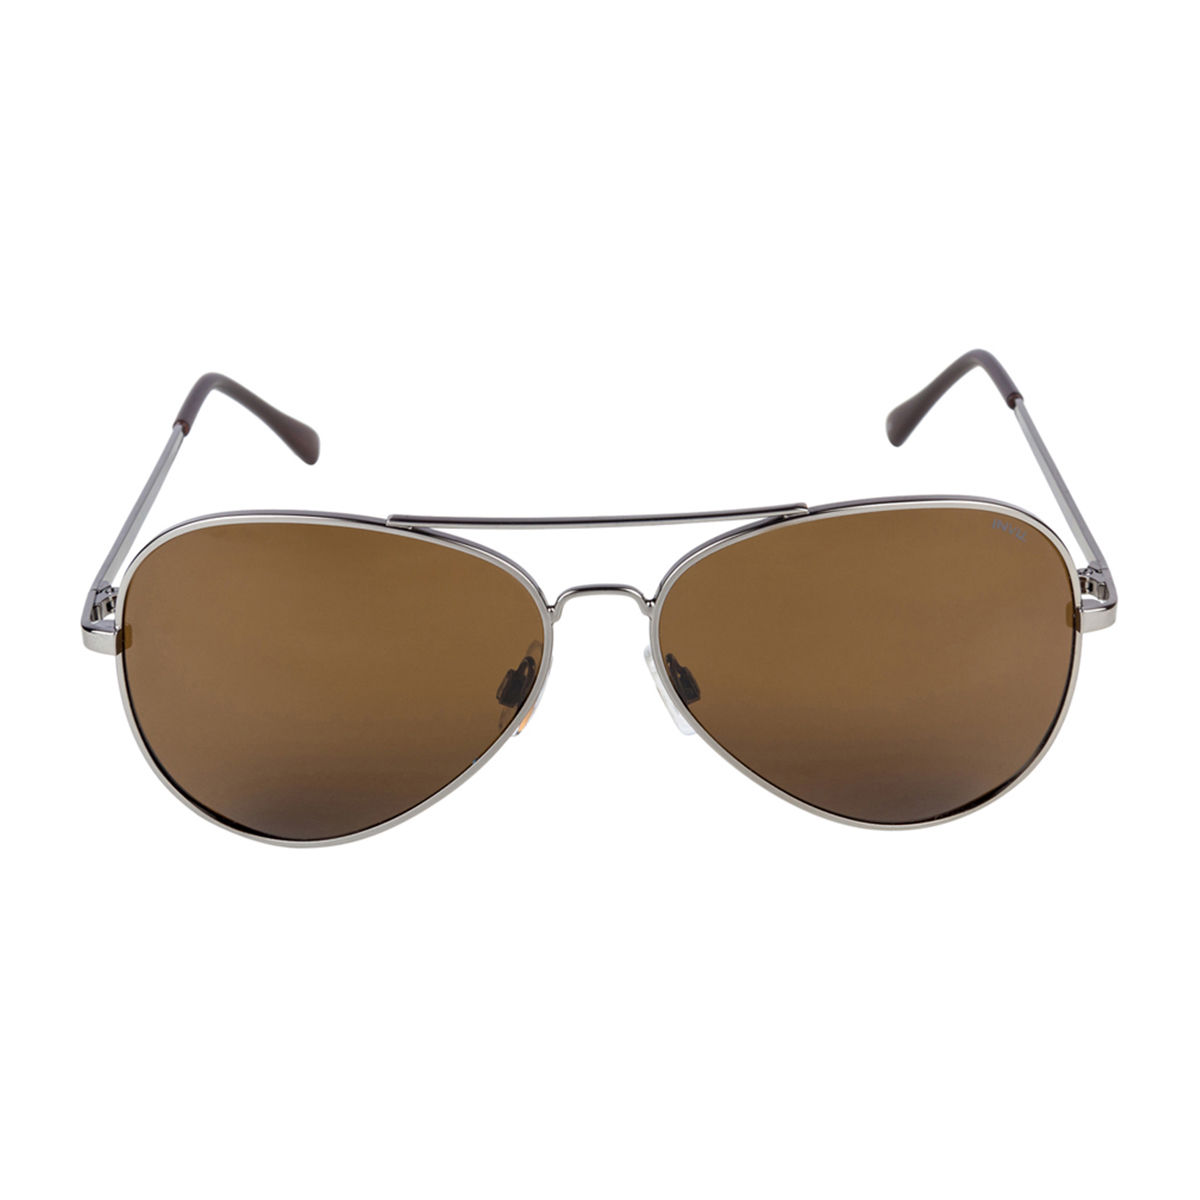 Invu Sunglasses Aviator With Brown Lens For Men